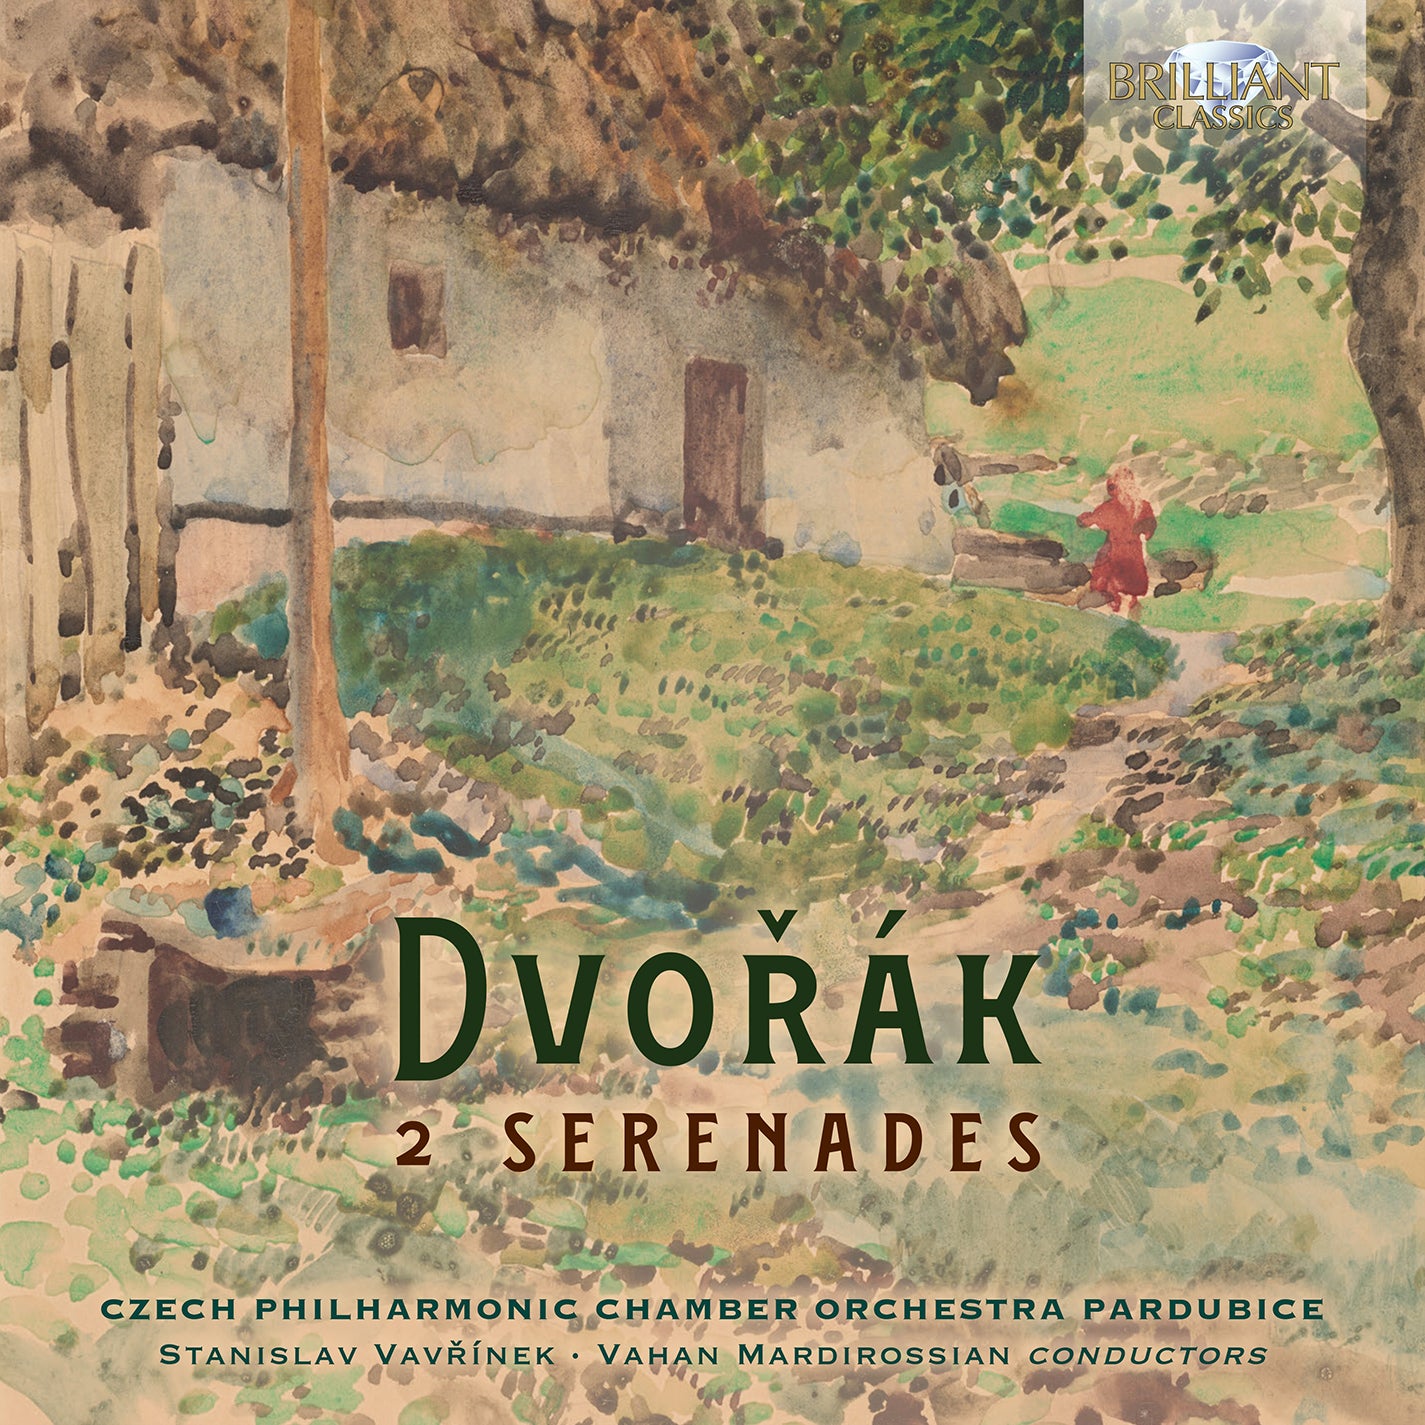 Dvořák: 2 Serenades / Vavřínek, Mardirossian, Czech Chamber Philharmonic Orchestra Pardubice